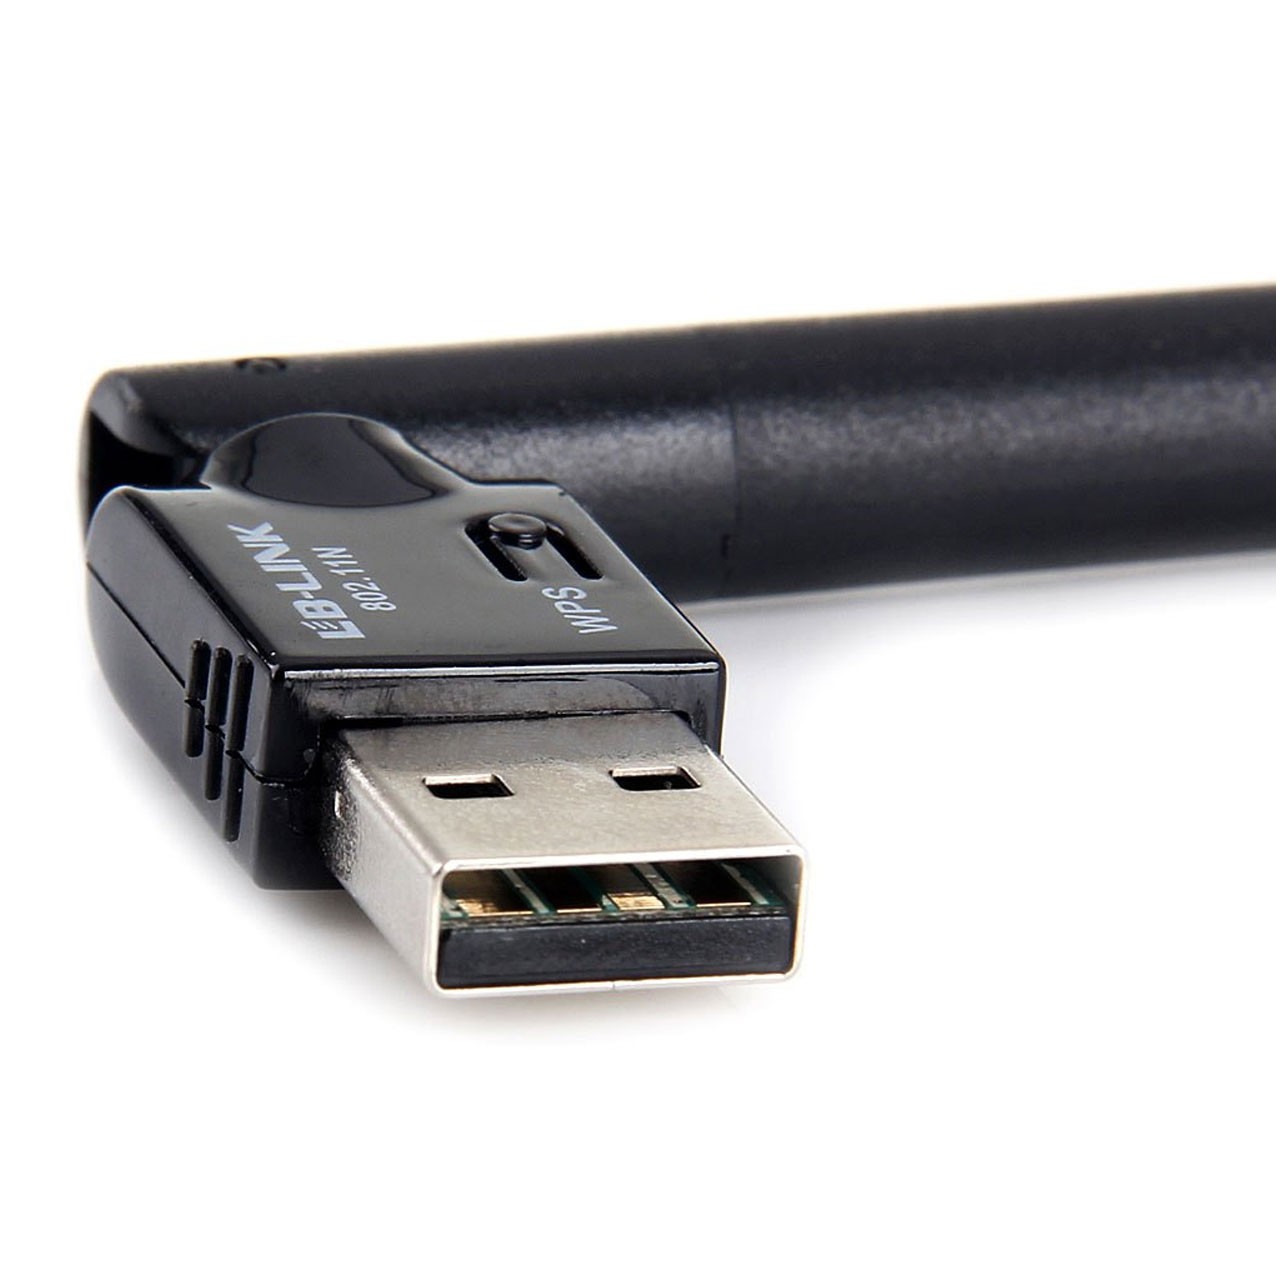 کارت شبکه USB بی سیم آنتن دار LB-LINK 